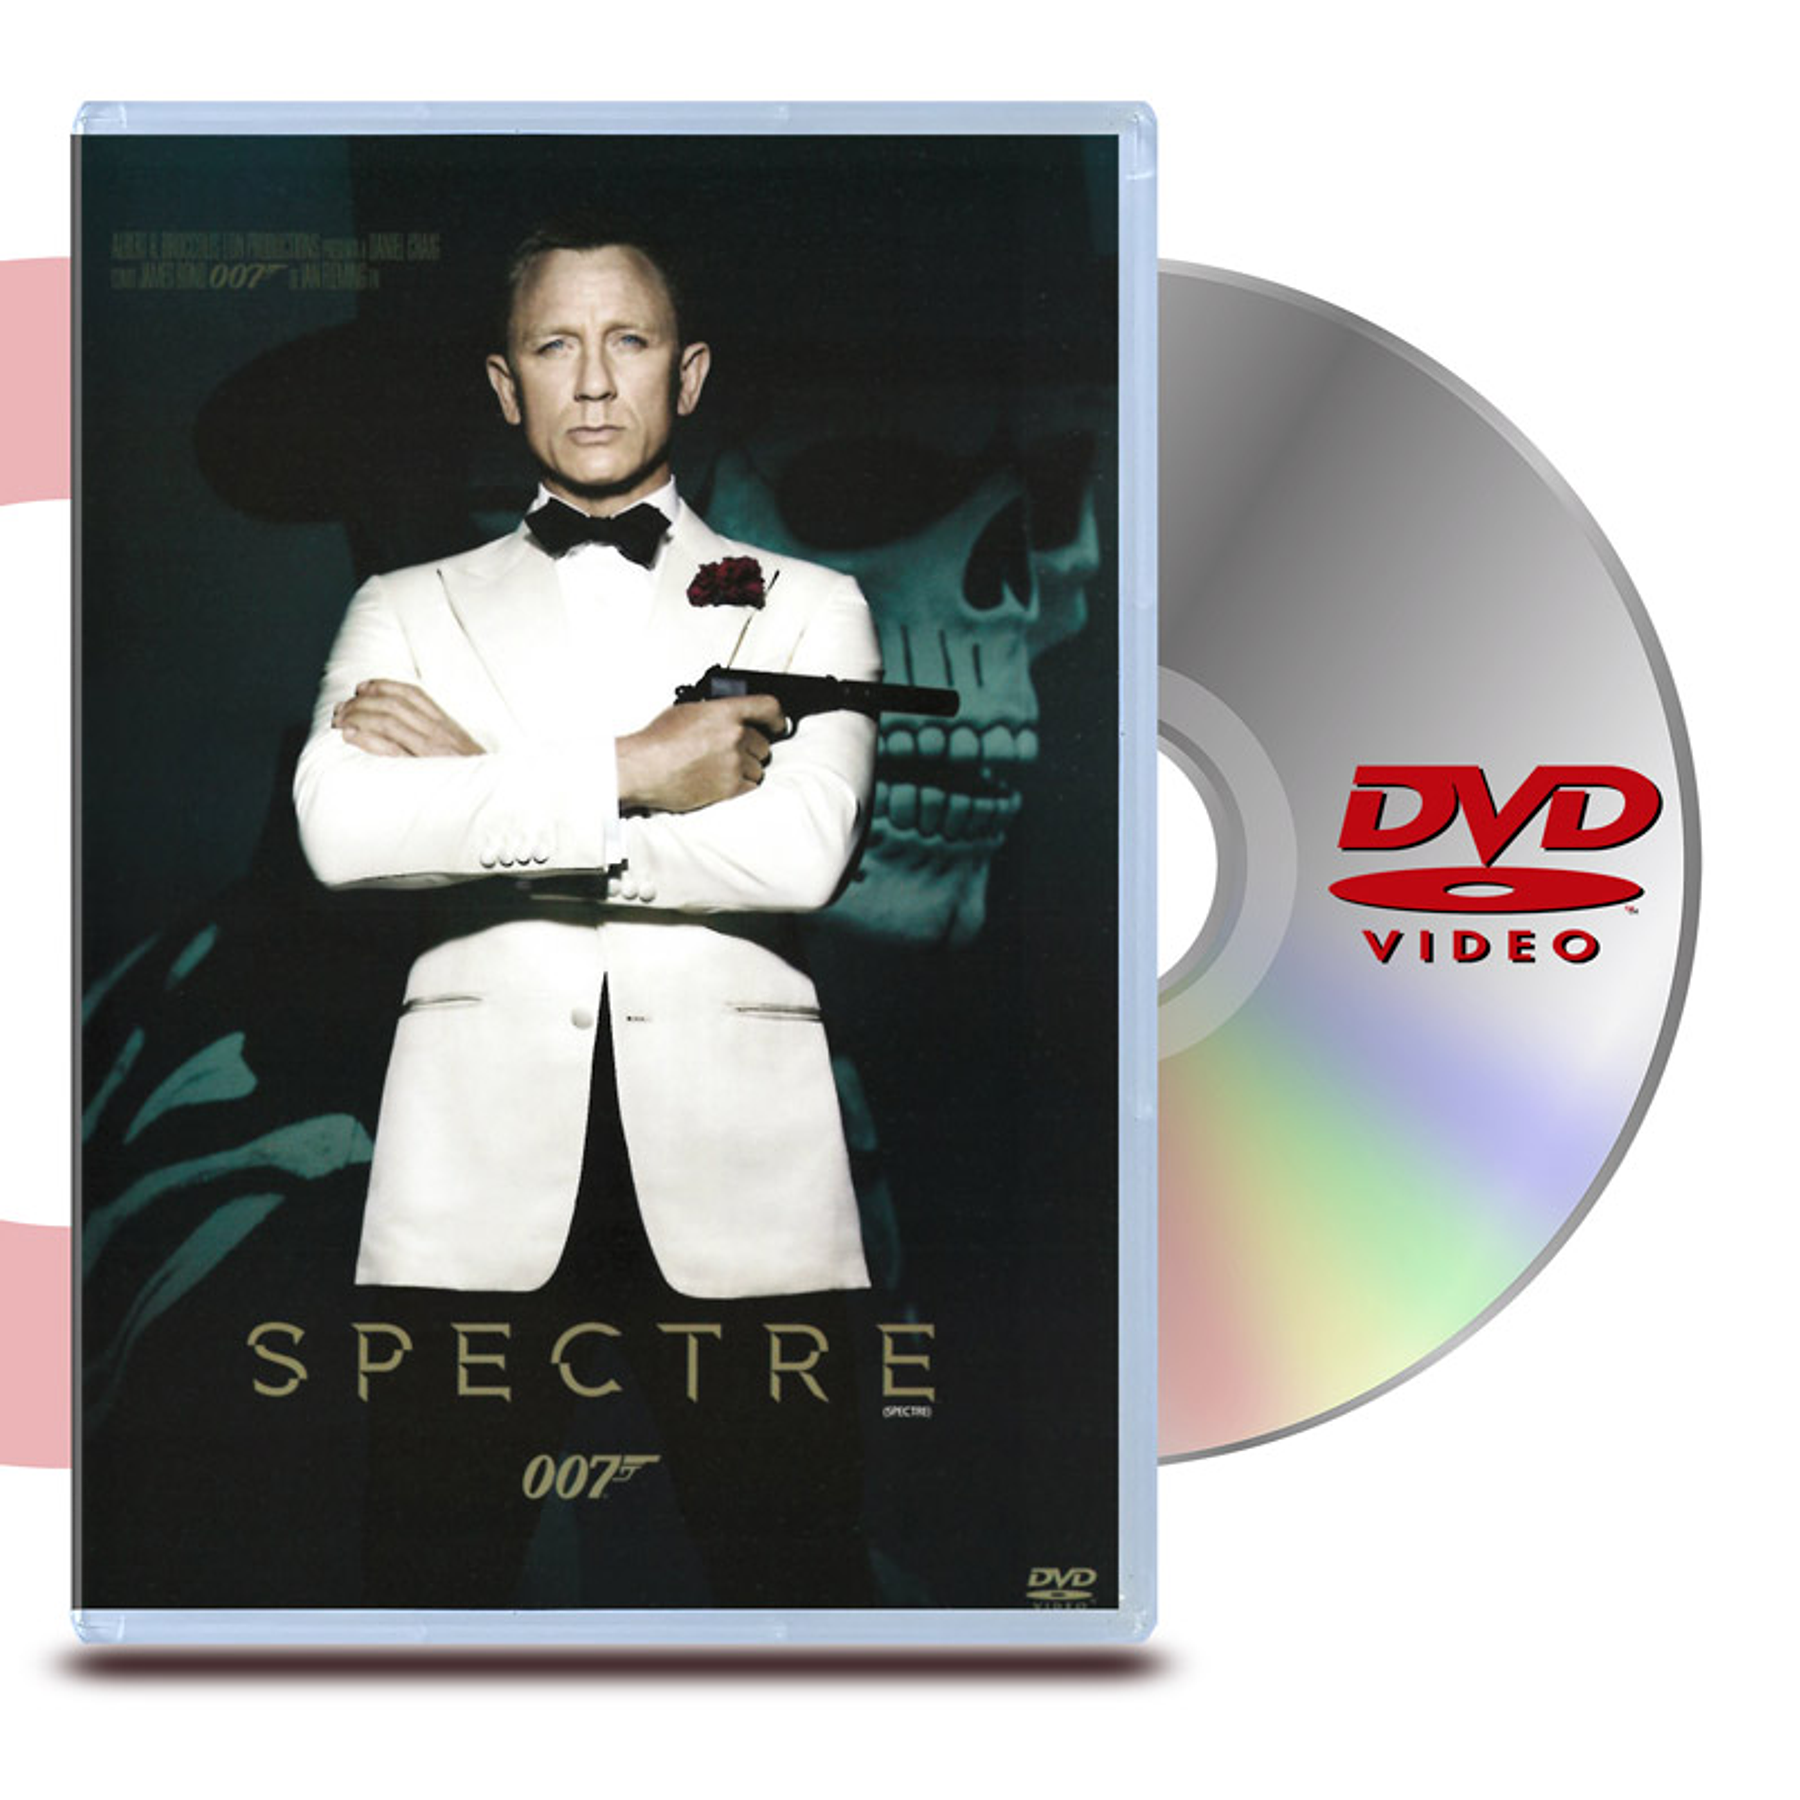 DVD SPECTRE 007